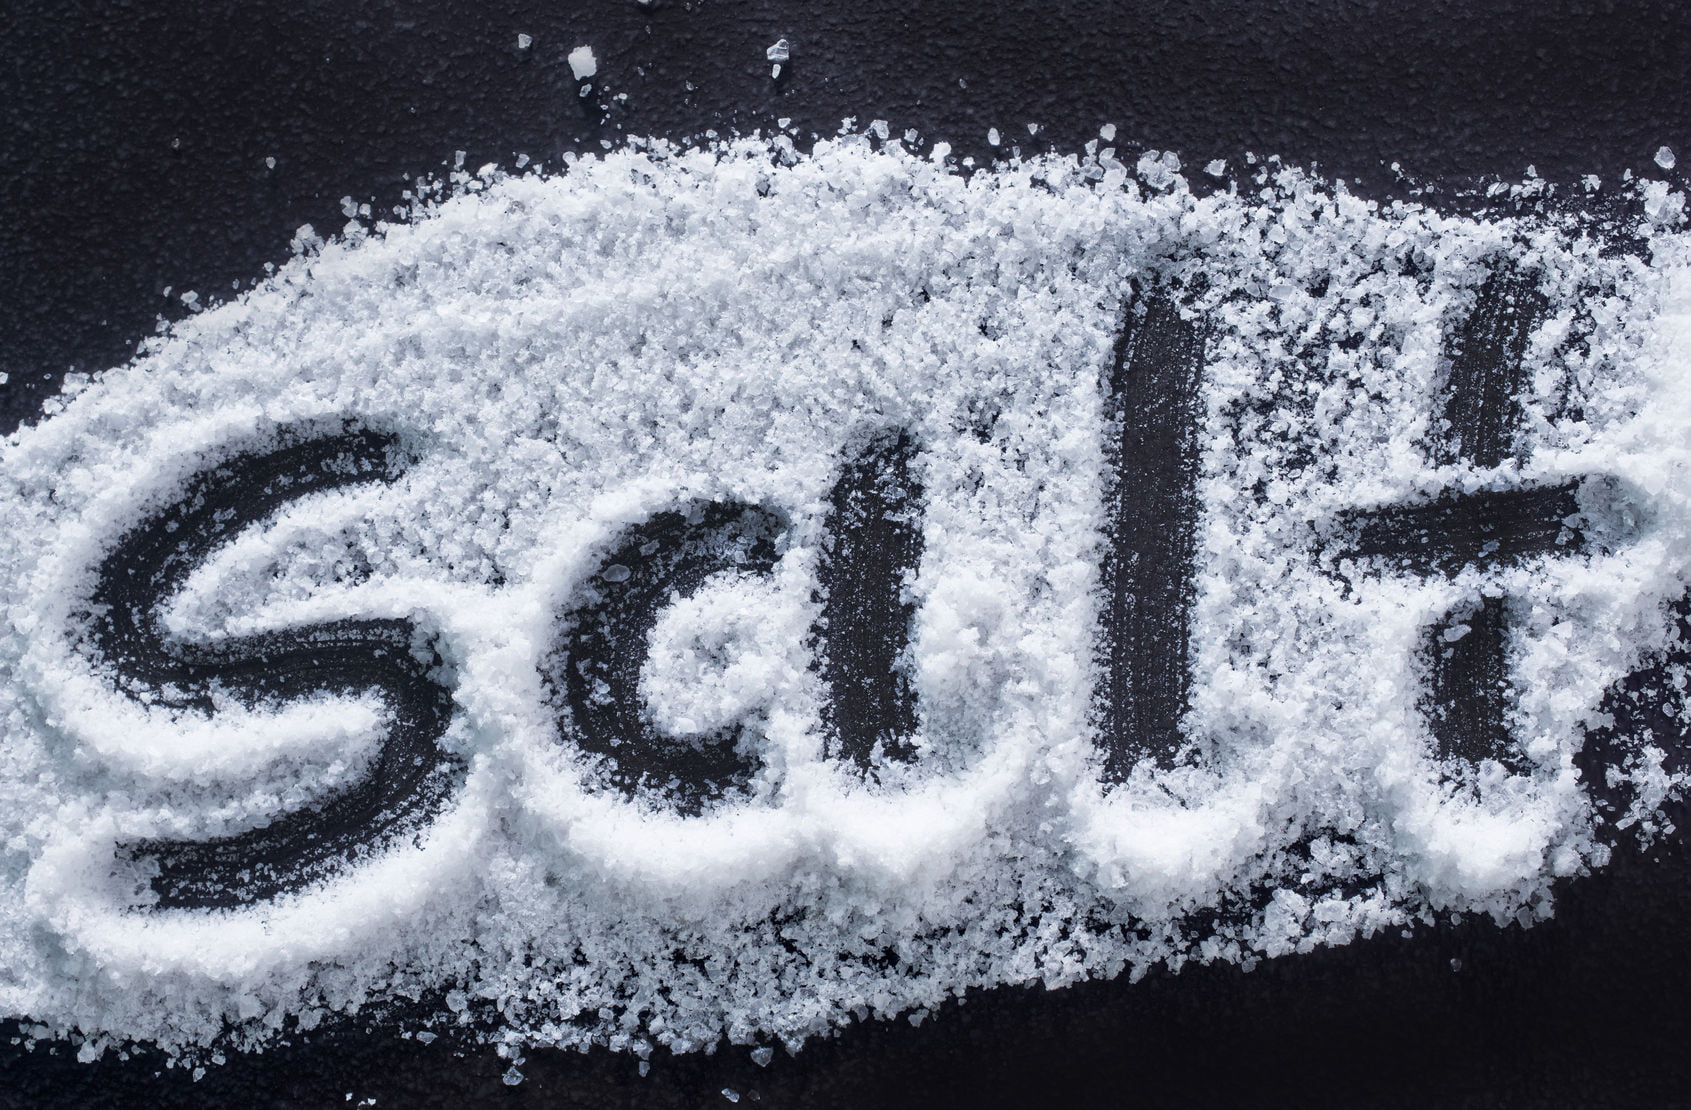 salt reduction: the word "salt" written in salt